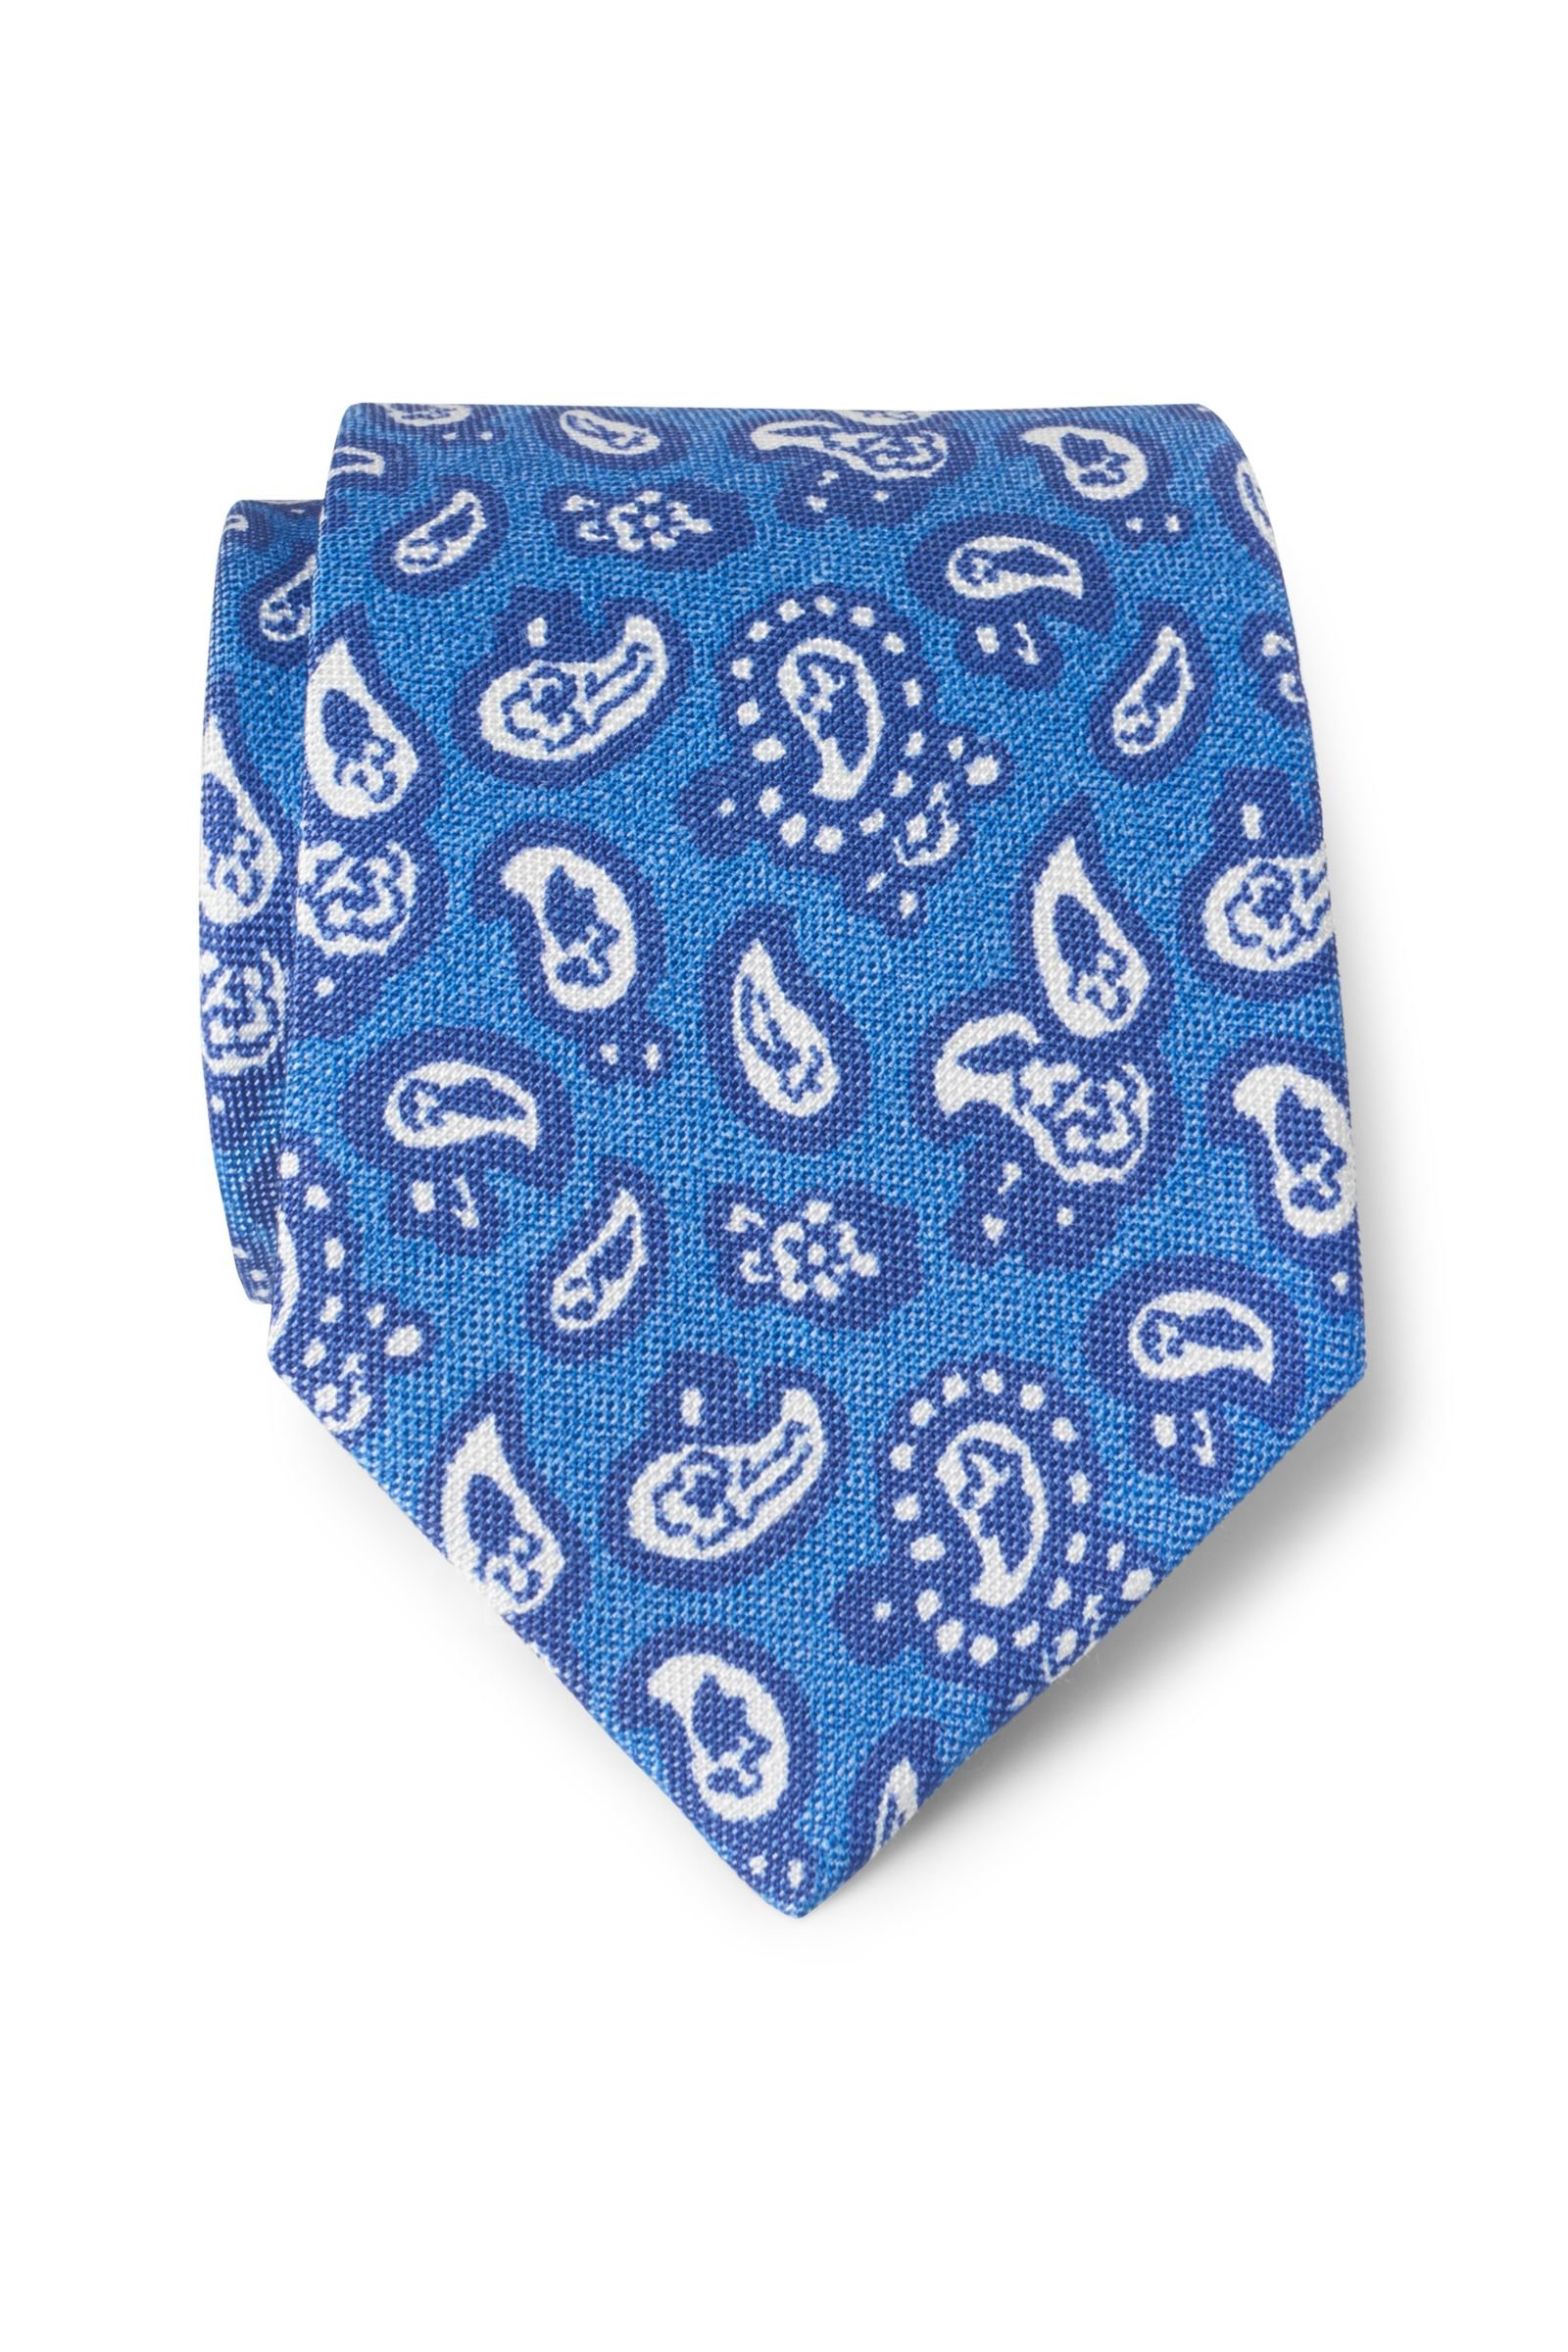 Tie blue patterned